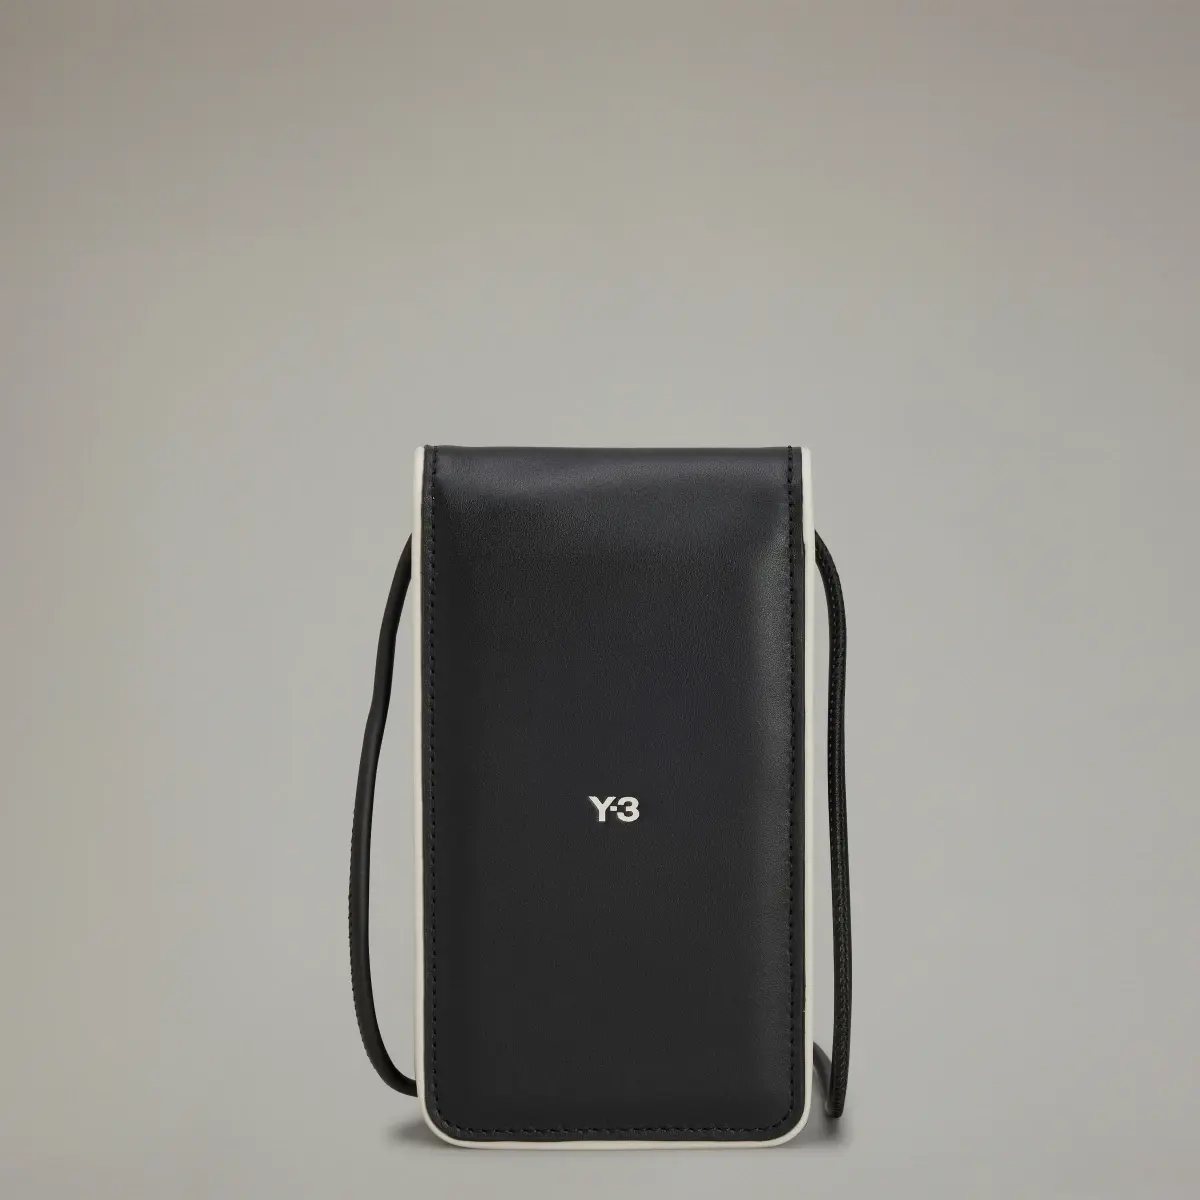 Adidas Y-3 Phone Case. 1